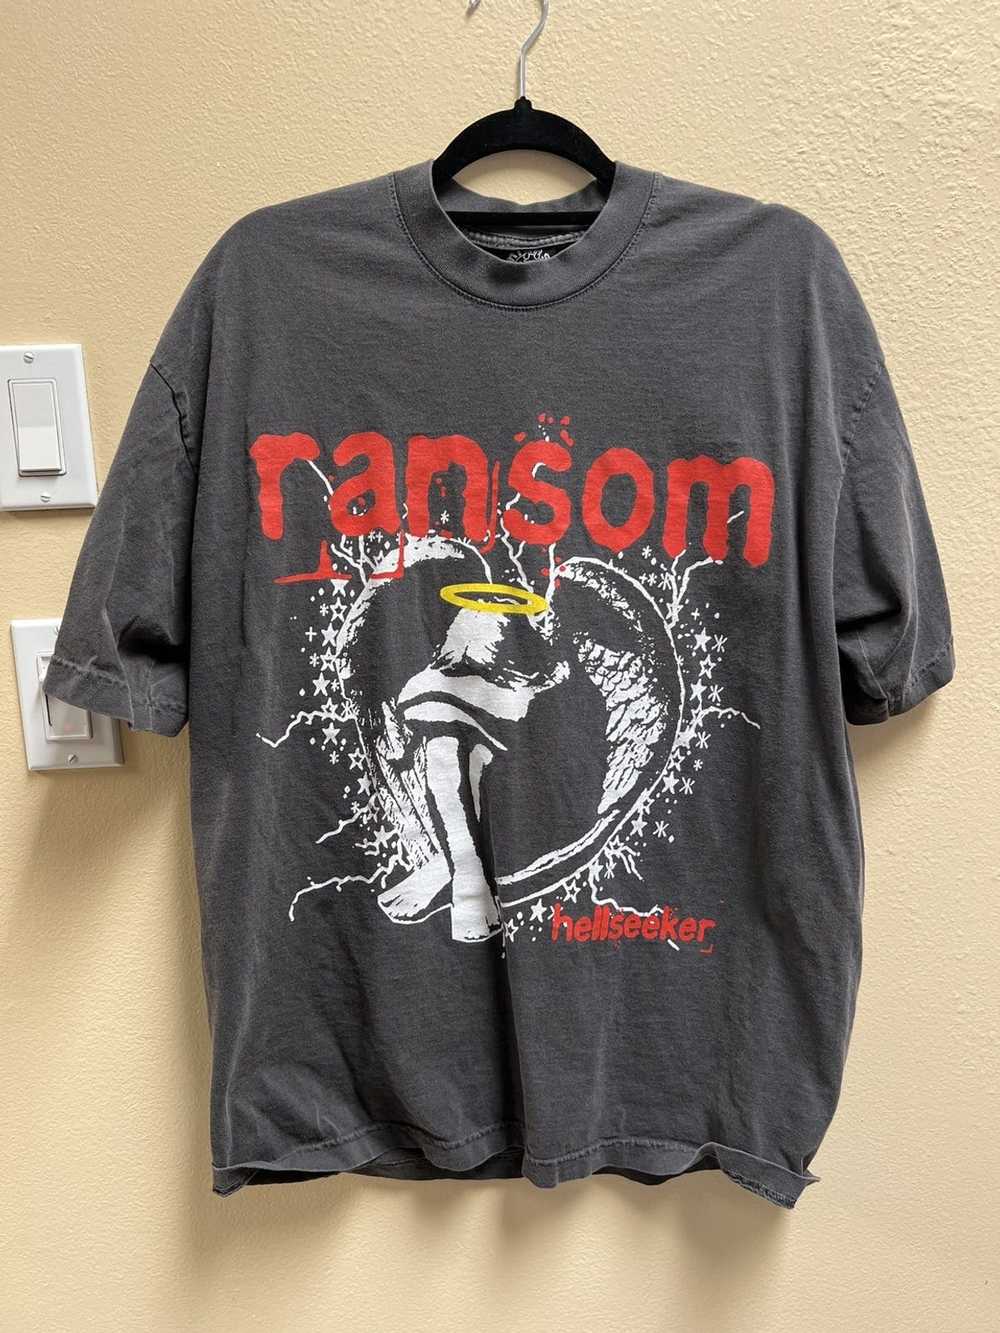 Ransom Clothing Ransom Hellseekr Shirt - image 1